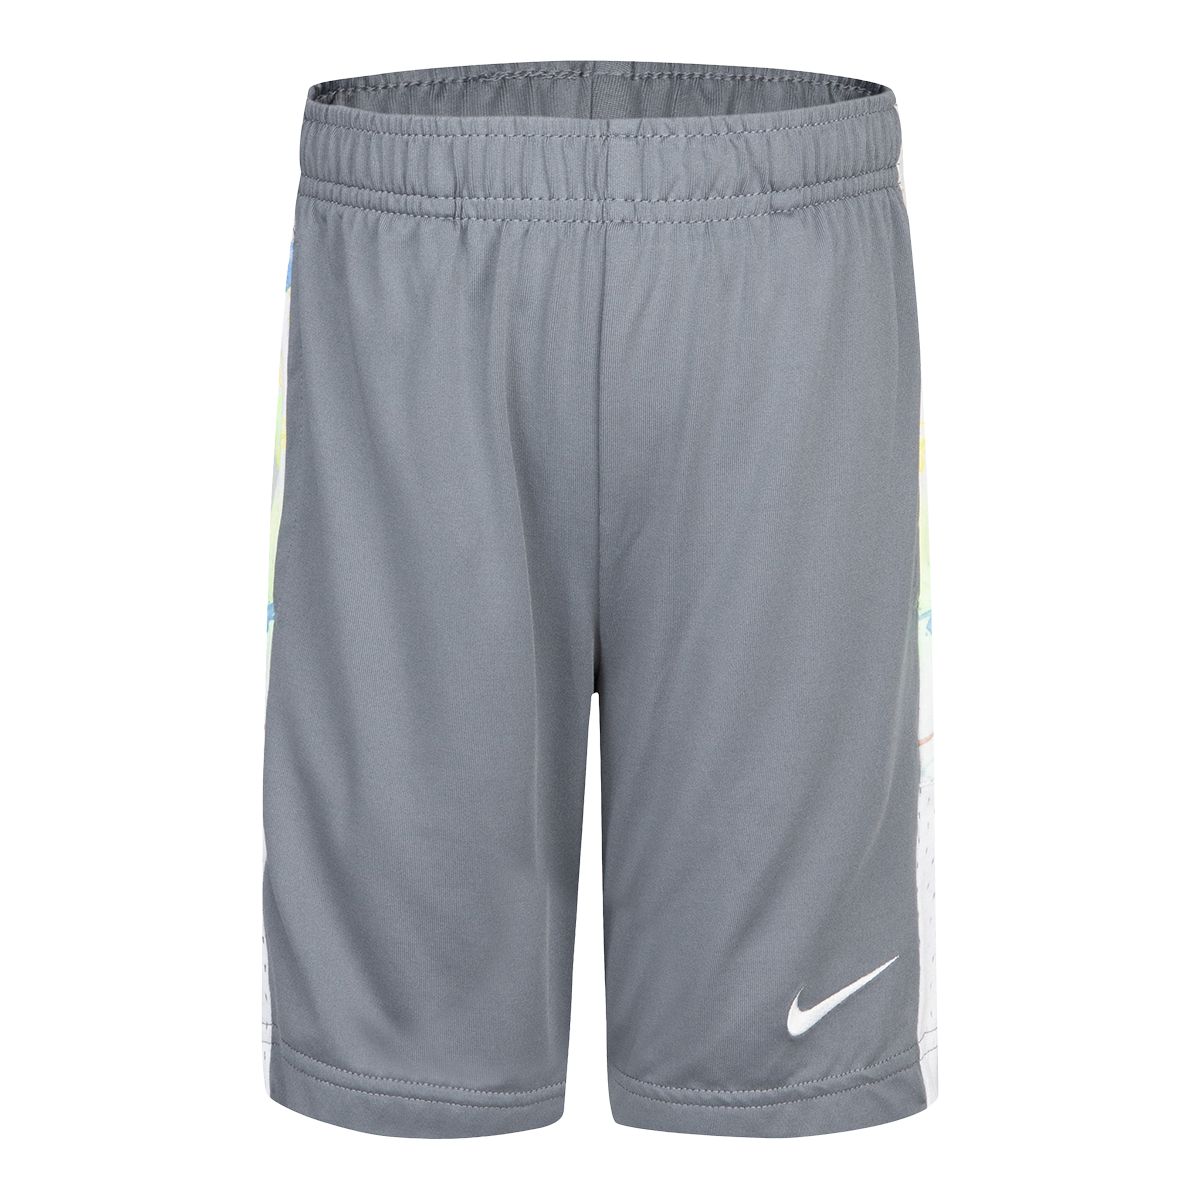 Image of Nike Boys' 4-7 Dri-FIT Daze Shorts